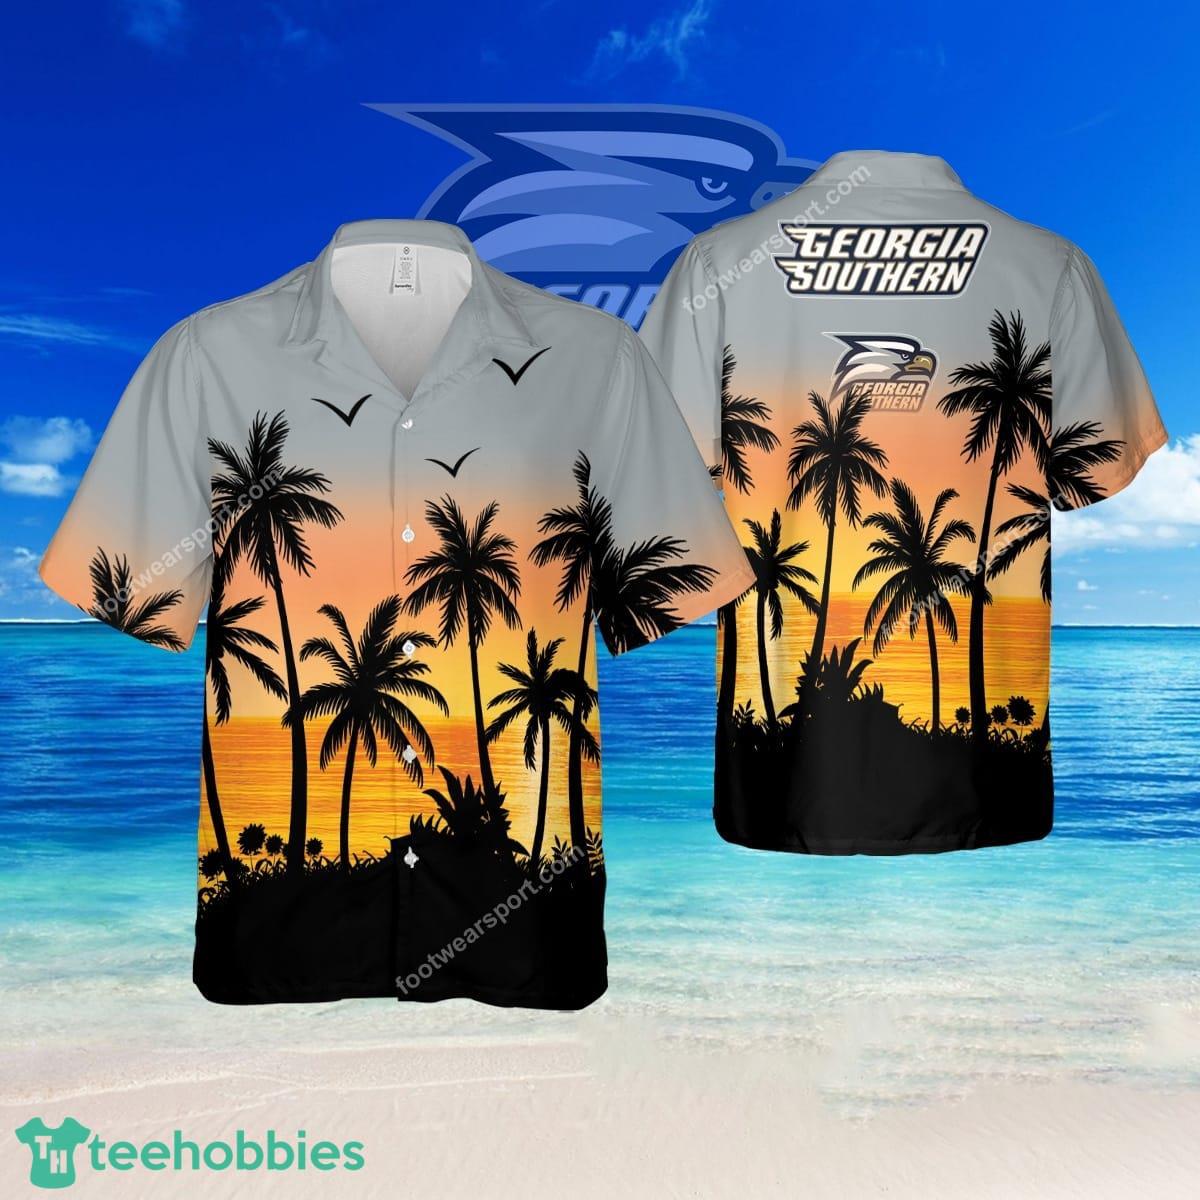 NCAA Georgia Southern Eagles Bulk Brand New Beach Hawaiian Shirt Gift For Fans - NCAA Georgia Southern Eagles Bulk Brand New Beach Hawaiian Shirt Gift For Fans